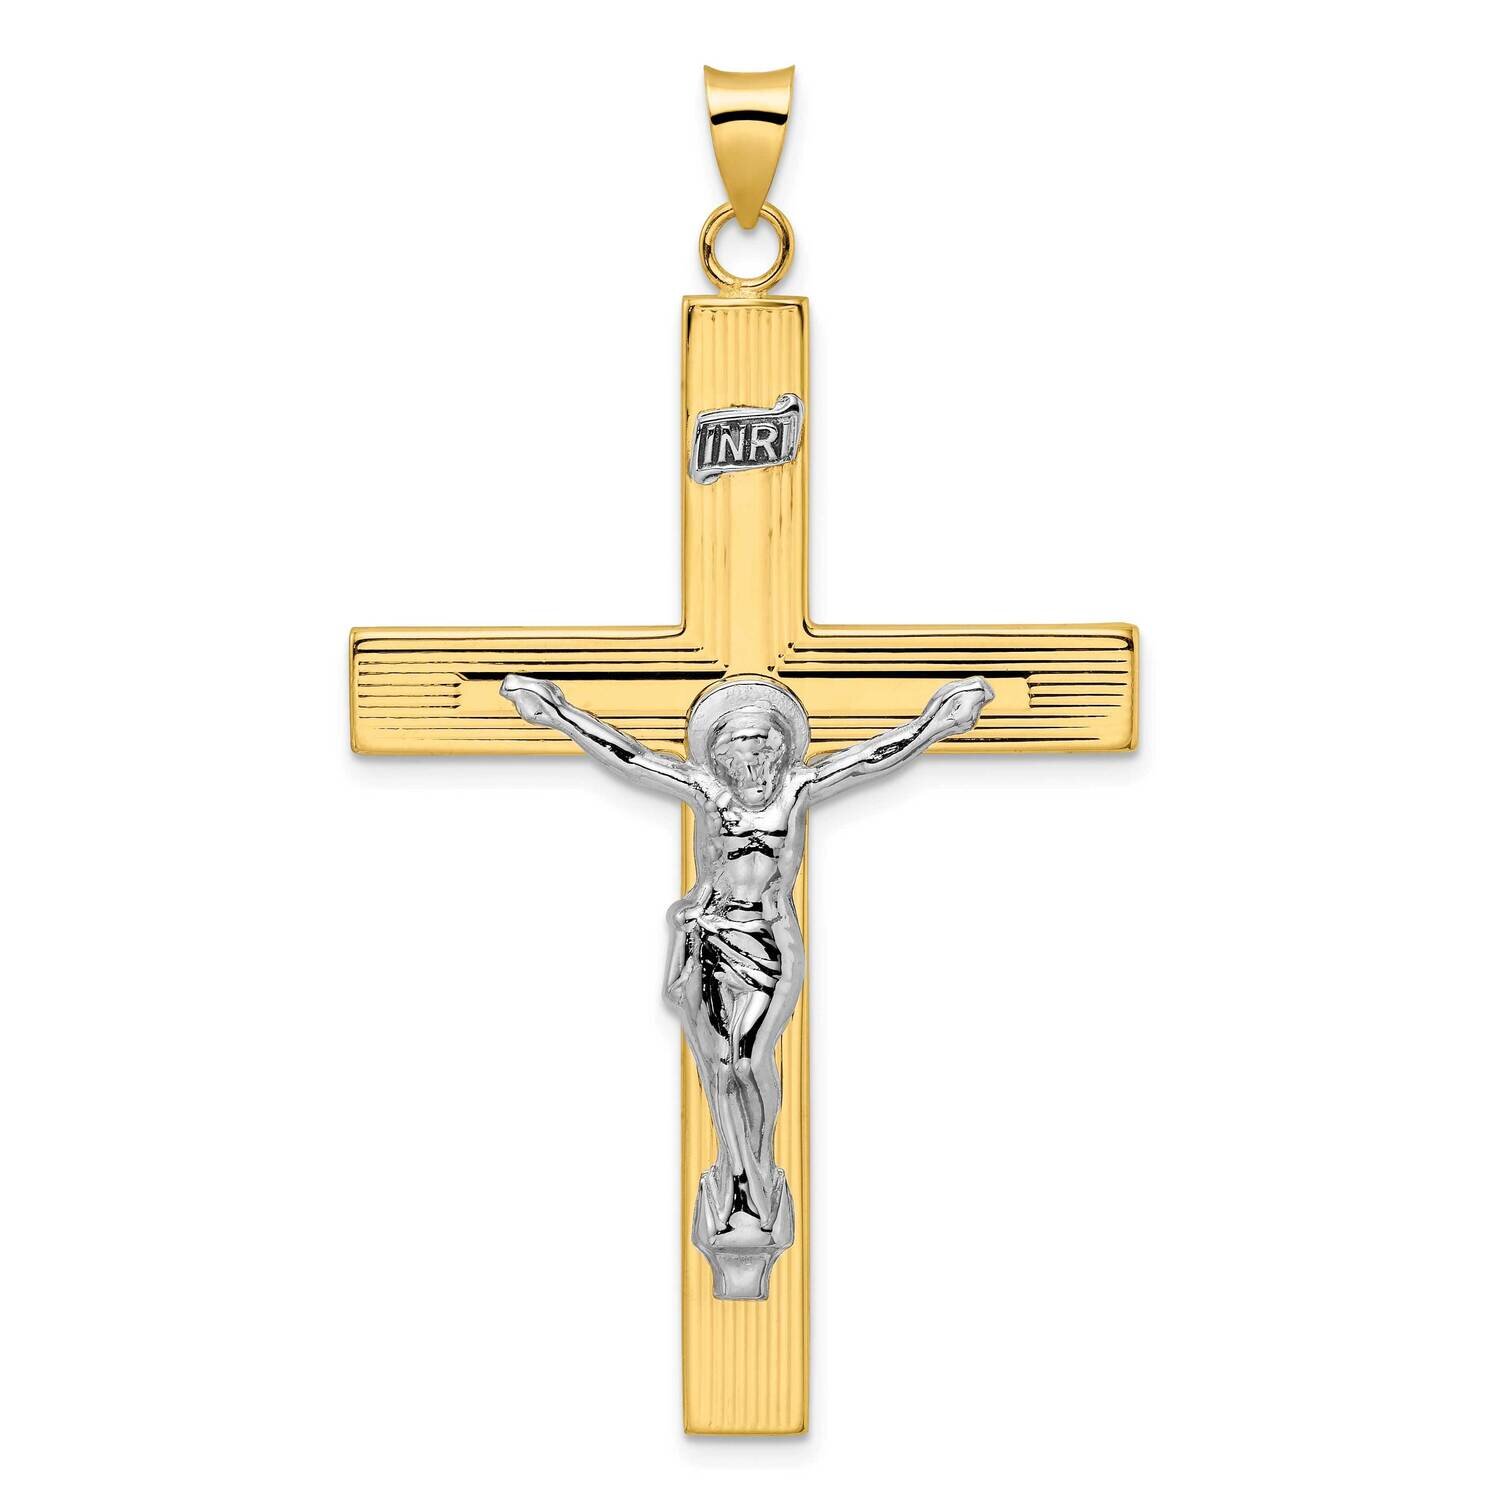 Solid Inri Curcifix Cross Pendant 14k Two-Tone Gold Polished XR2076